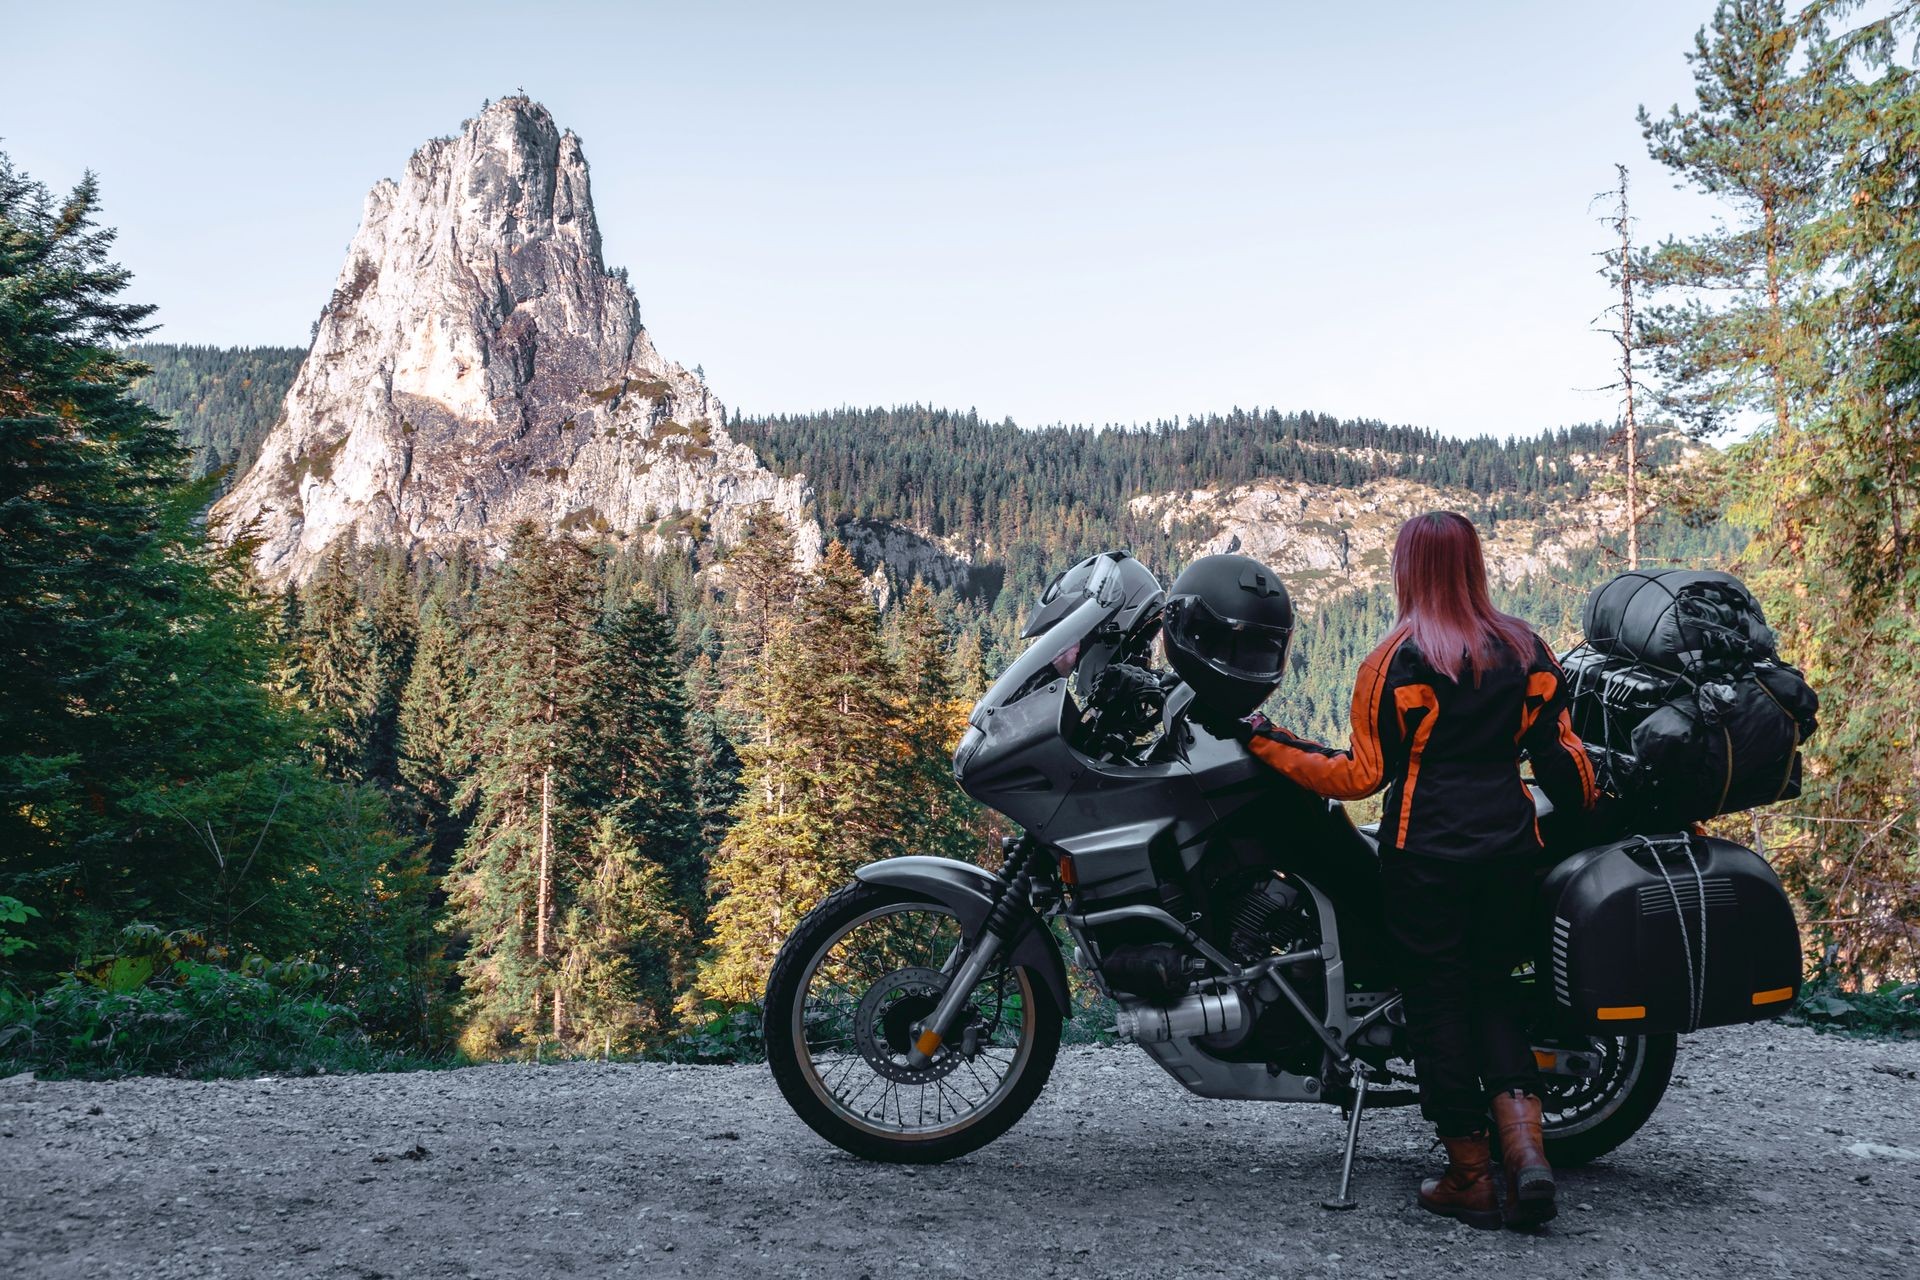 Motorcycle/ATV Insurance